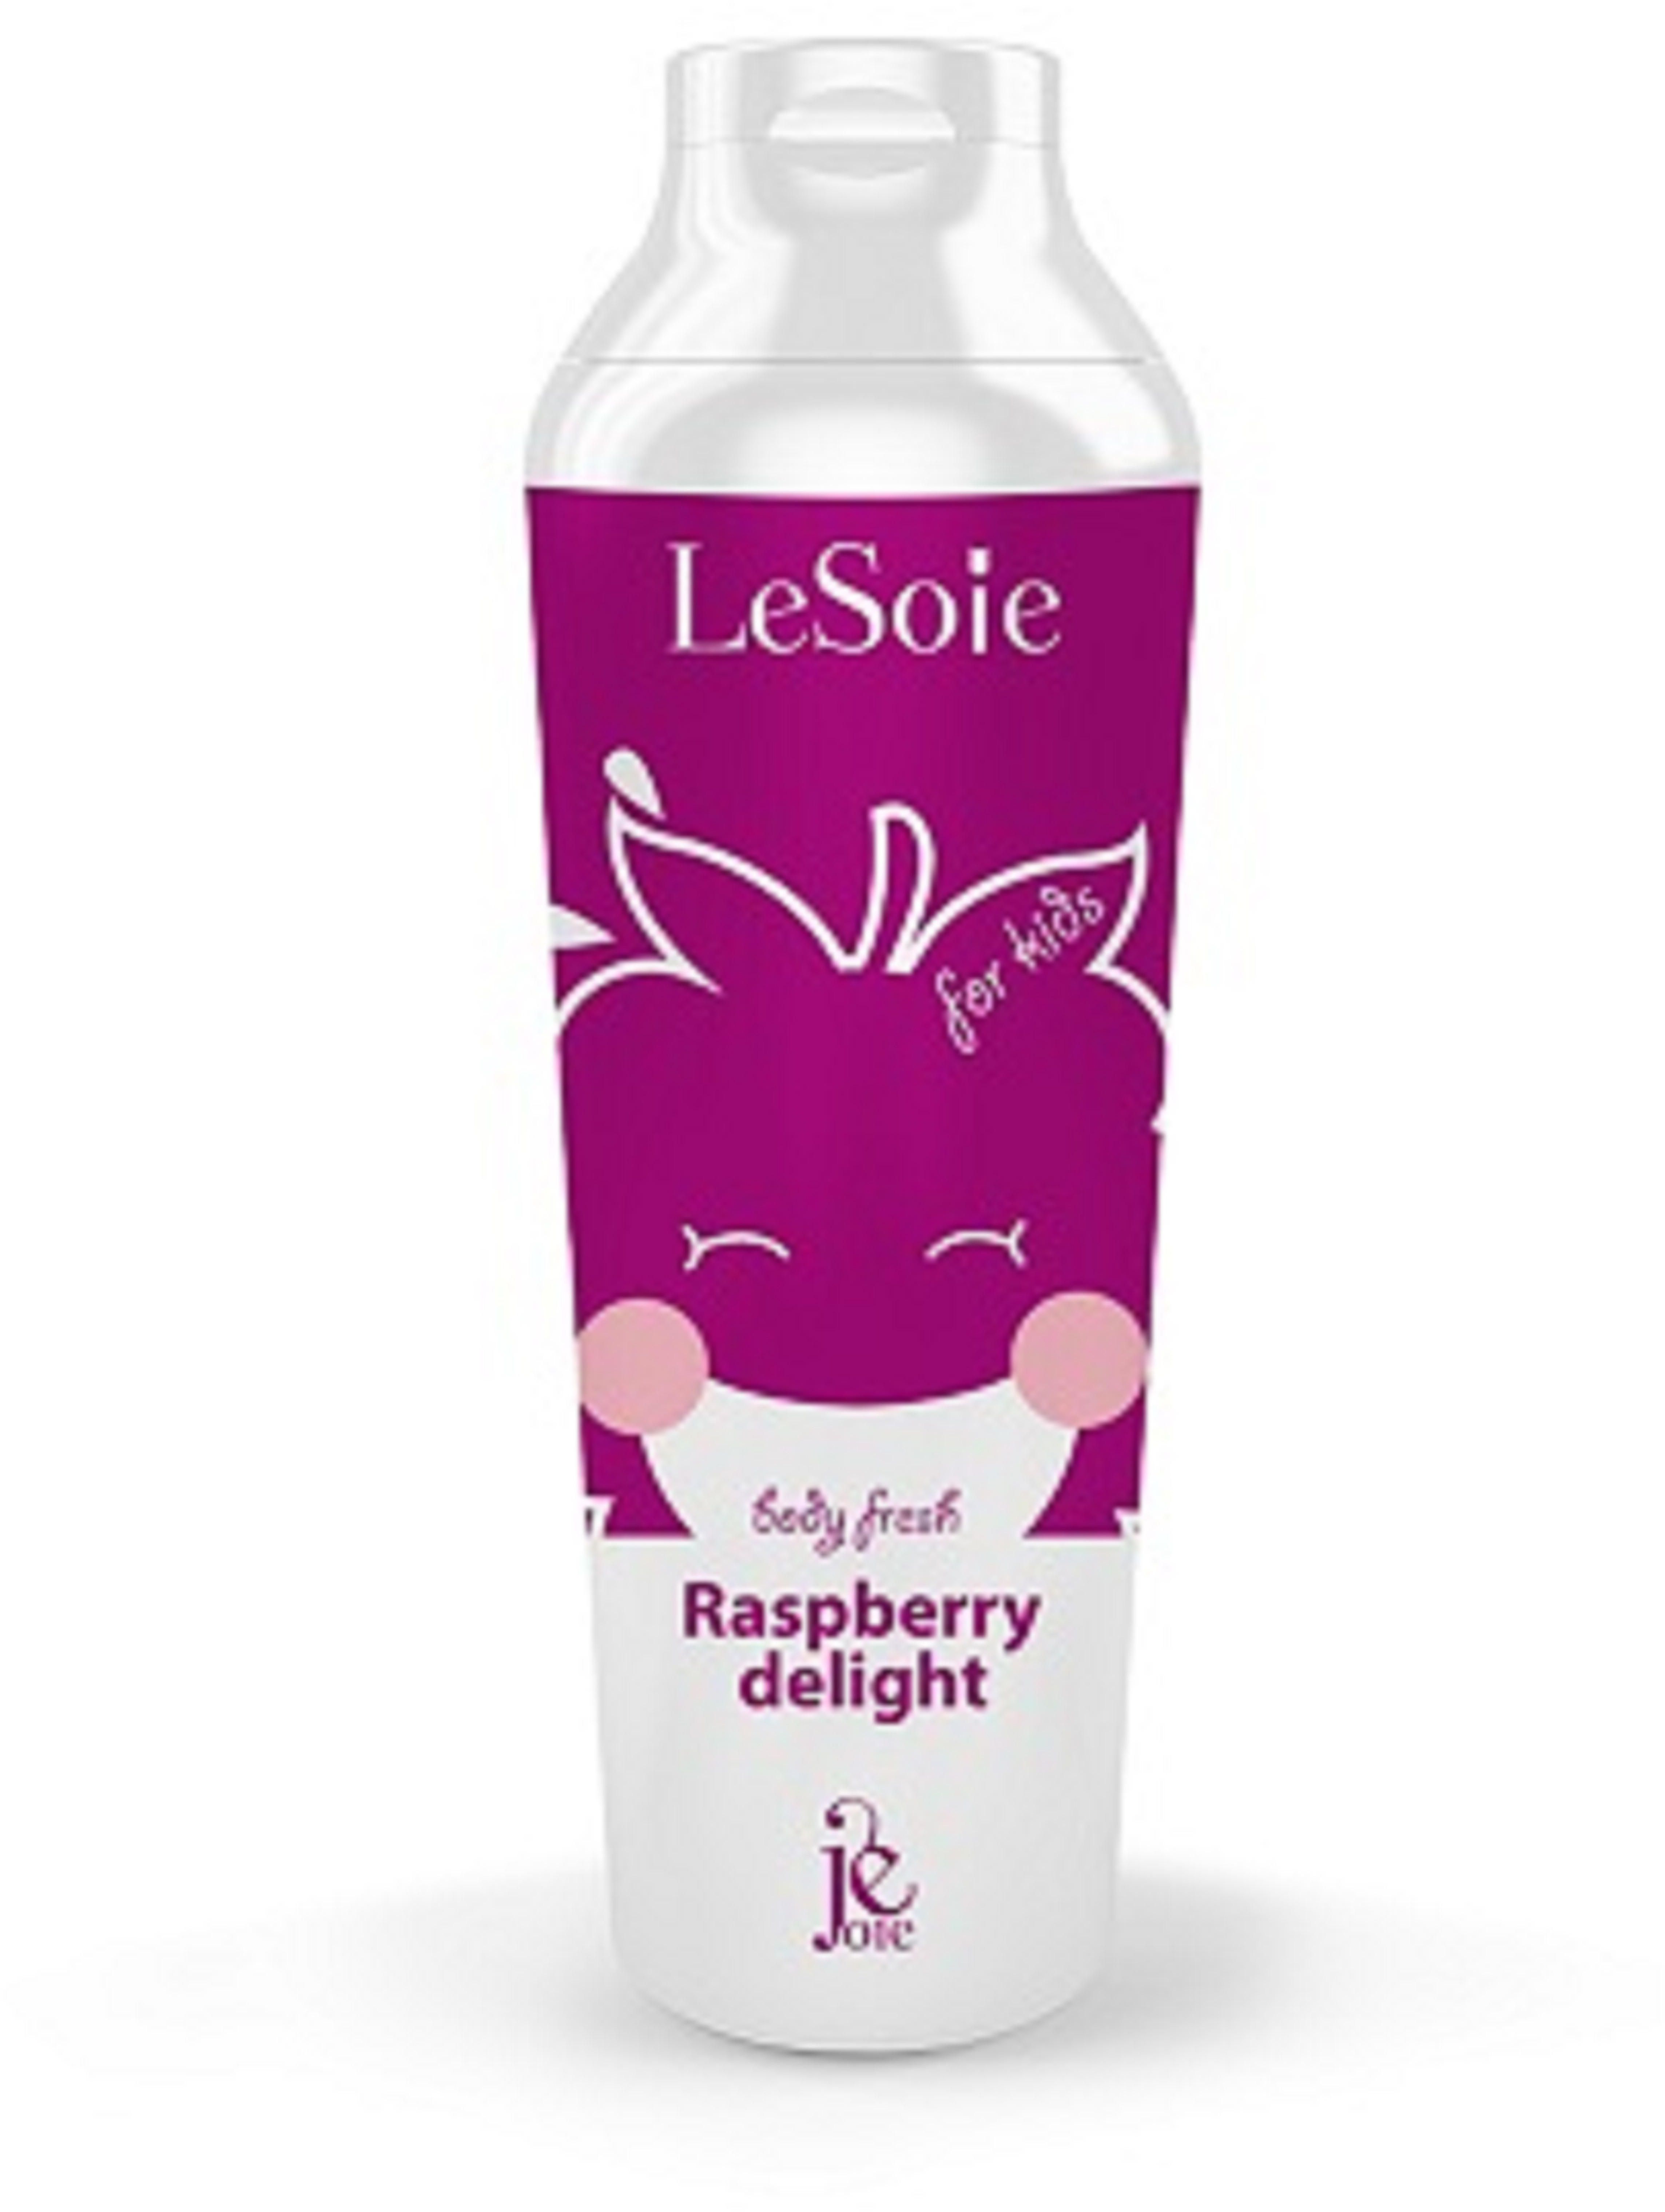 LeSoie Joie Kids Body Fresh Raspberry Delight 200ml